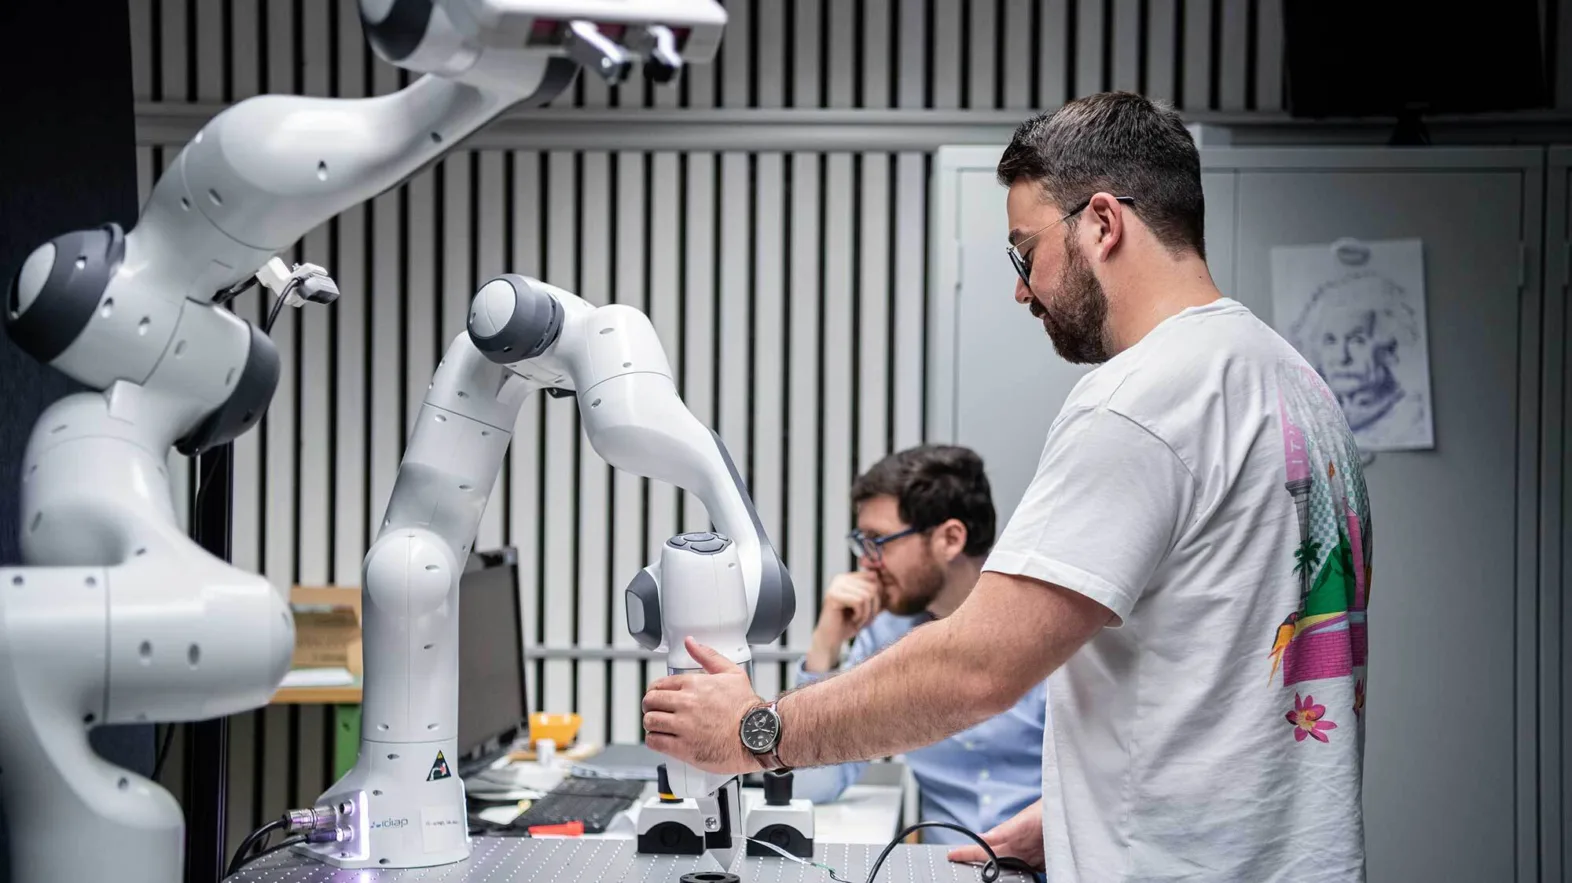 Two men working with robotics